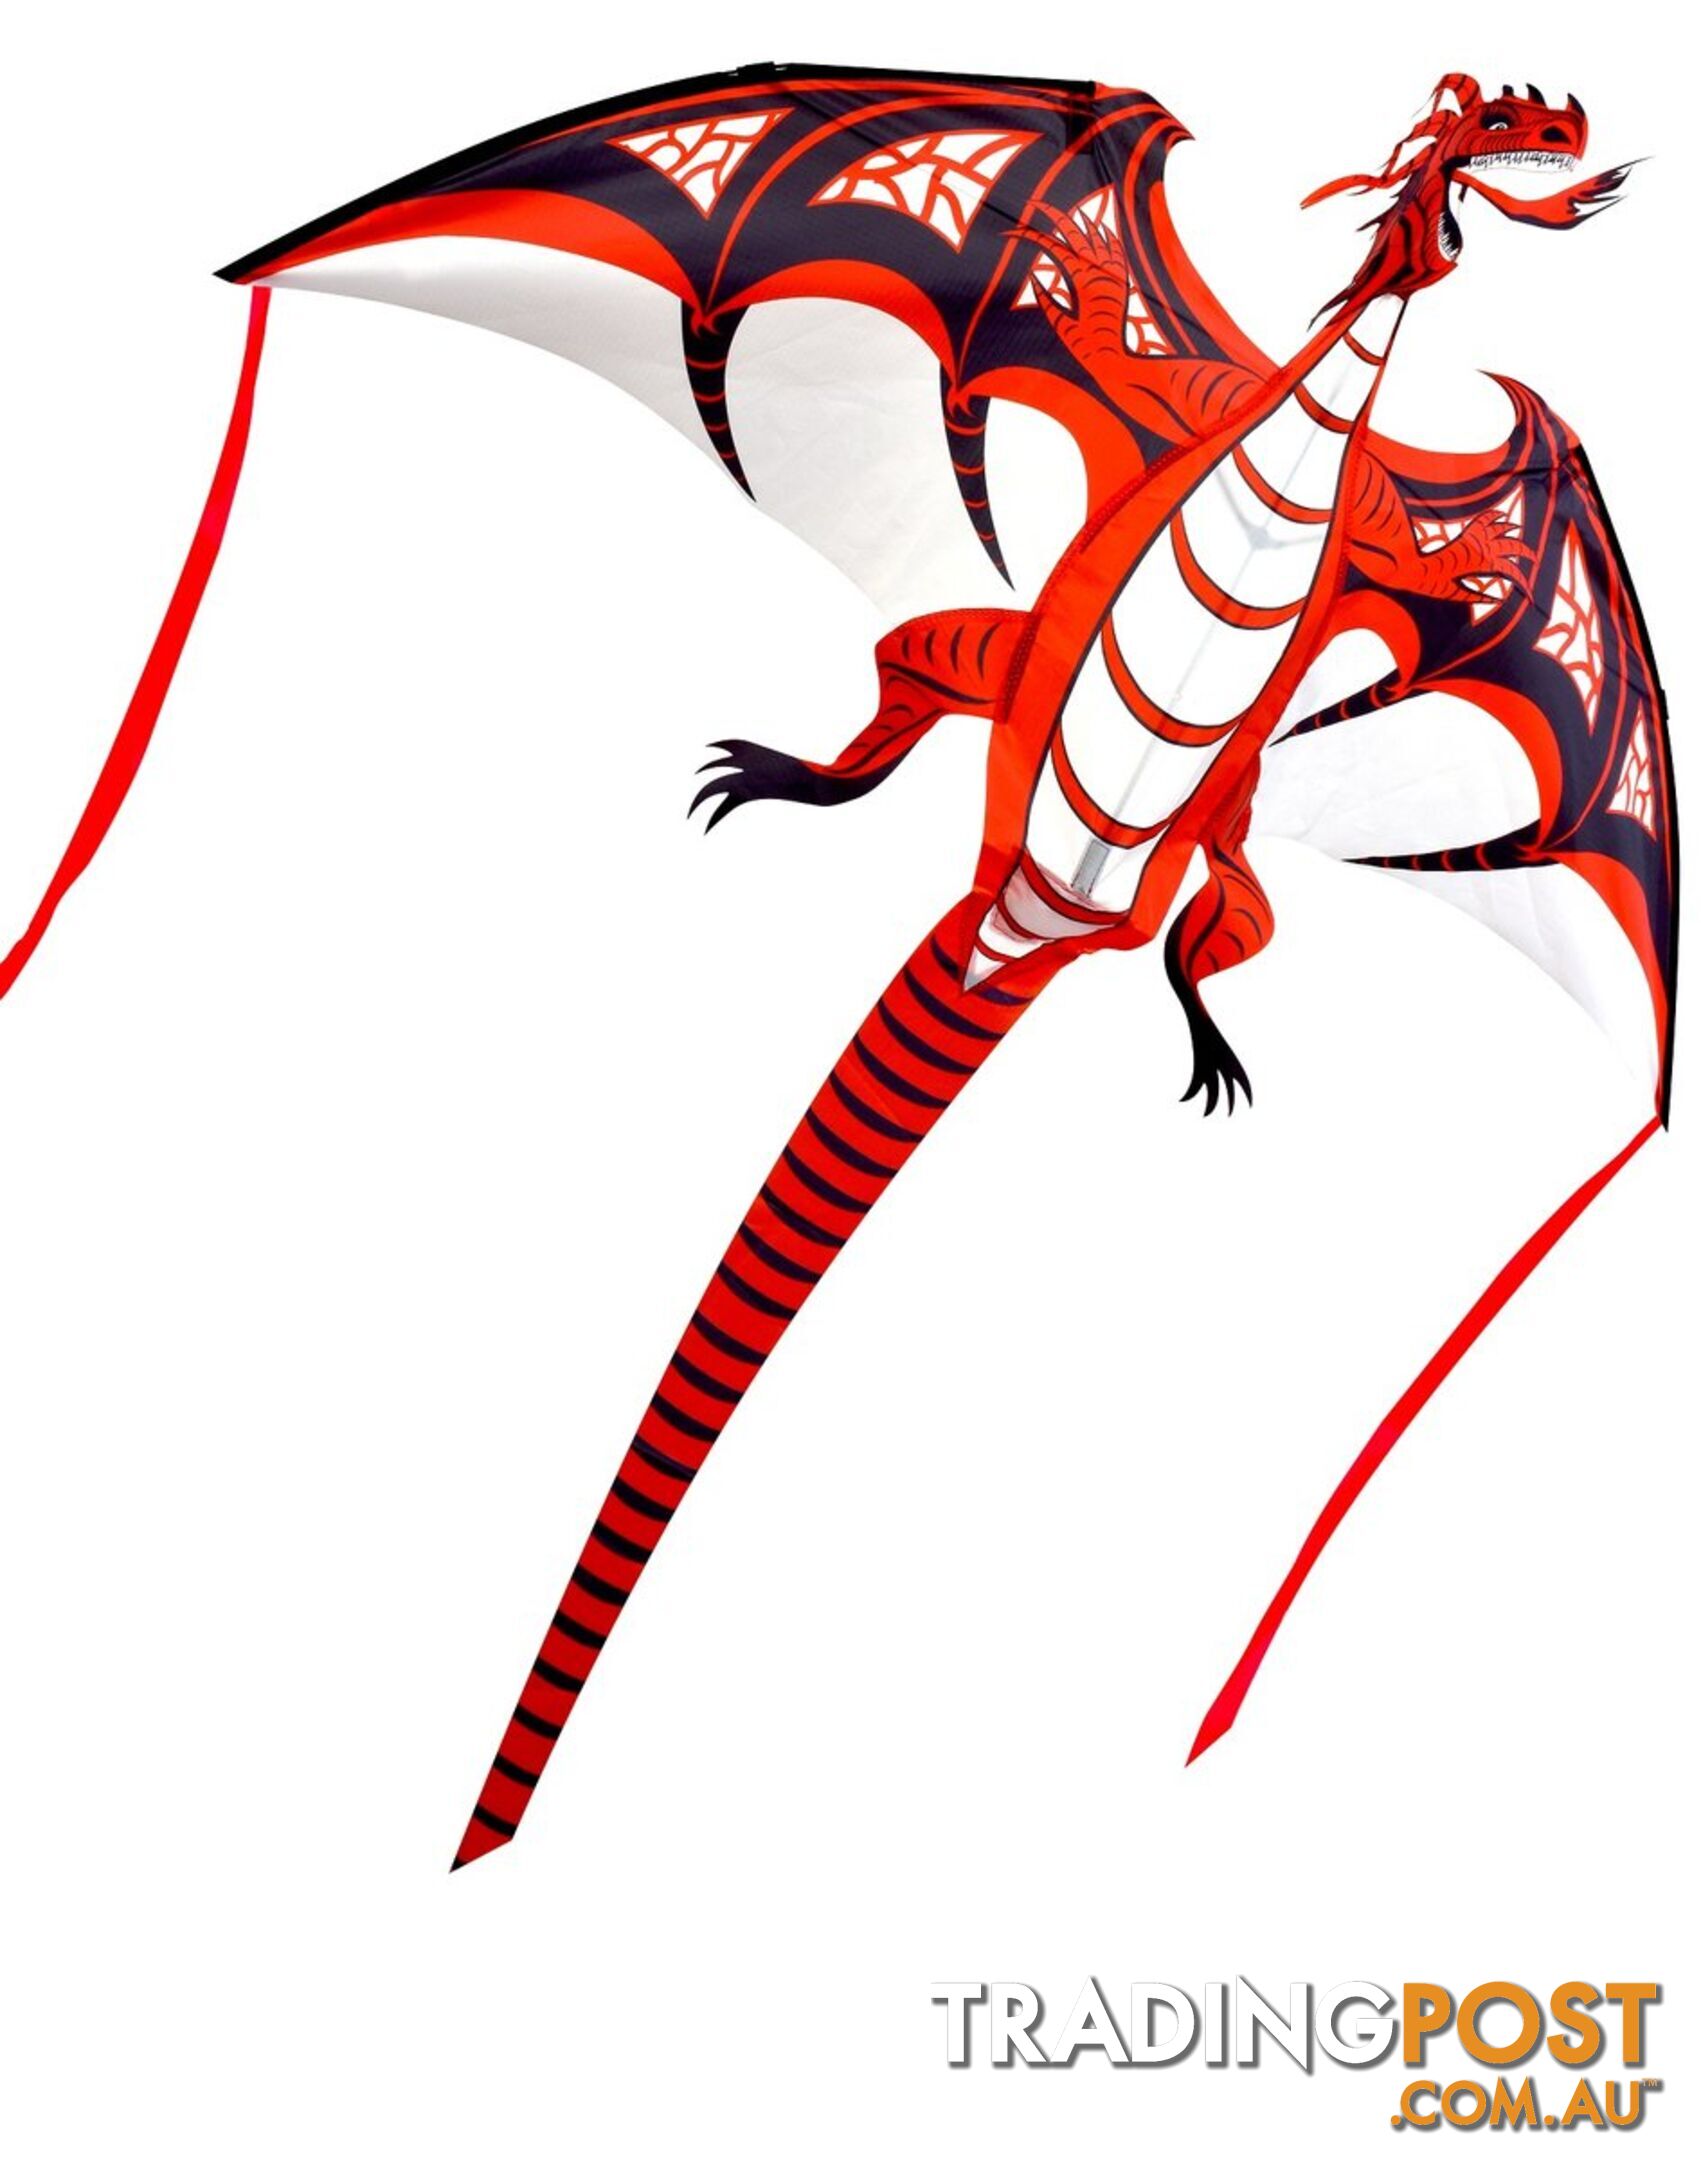 Brookite Fire Dragon Kite Art65630 - 5018621300534